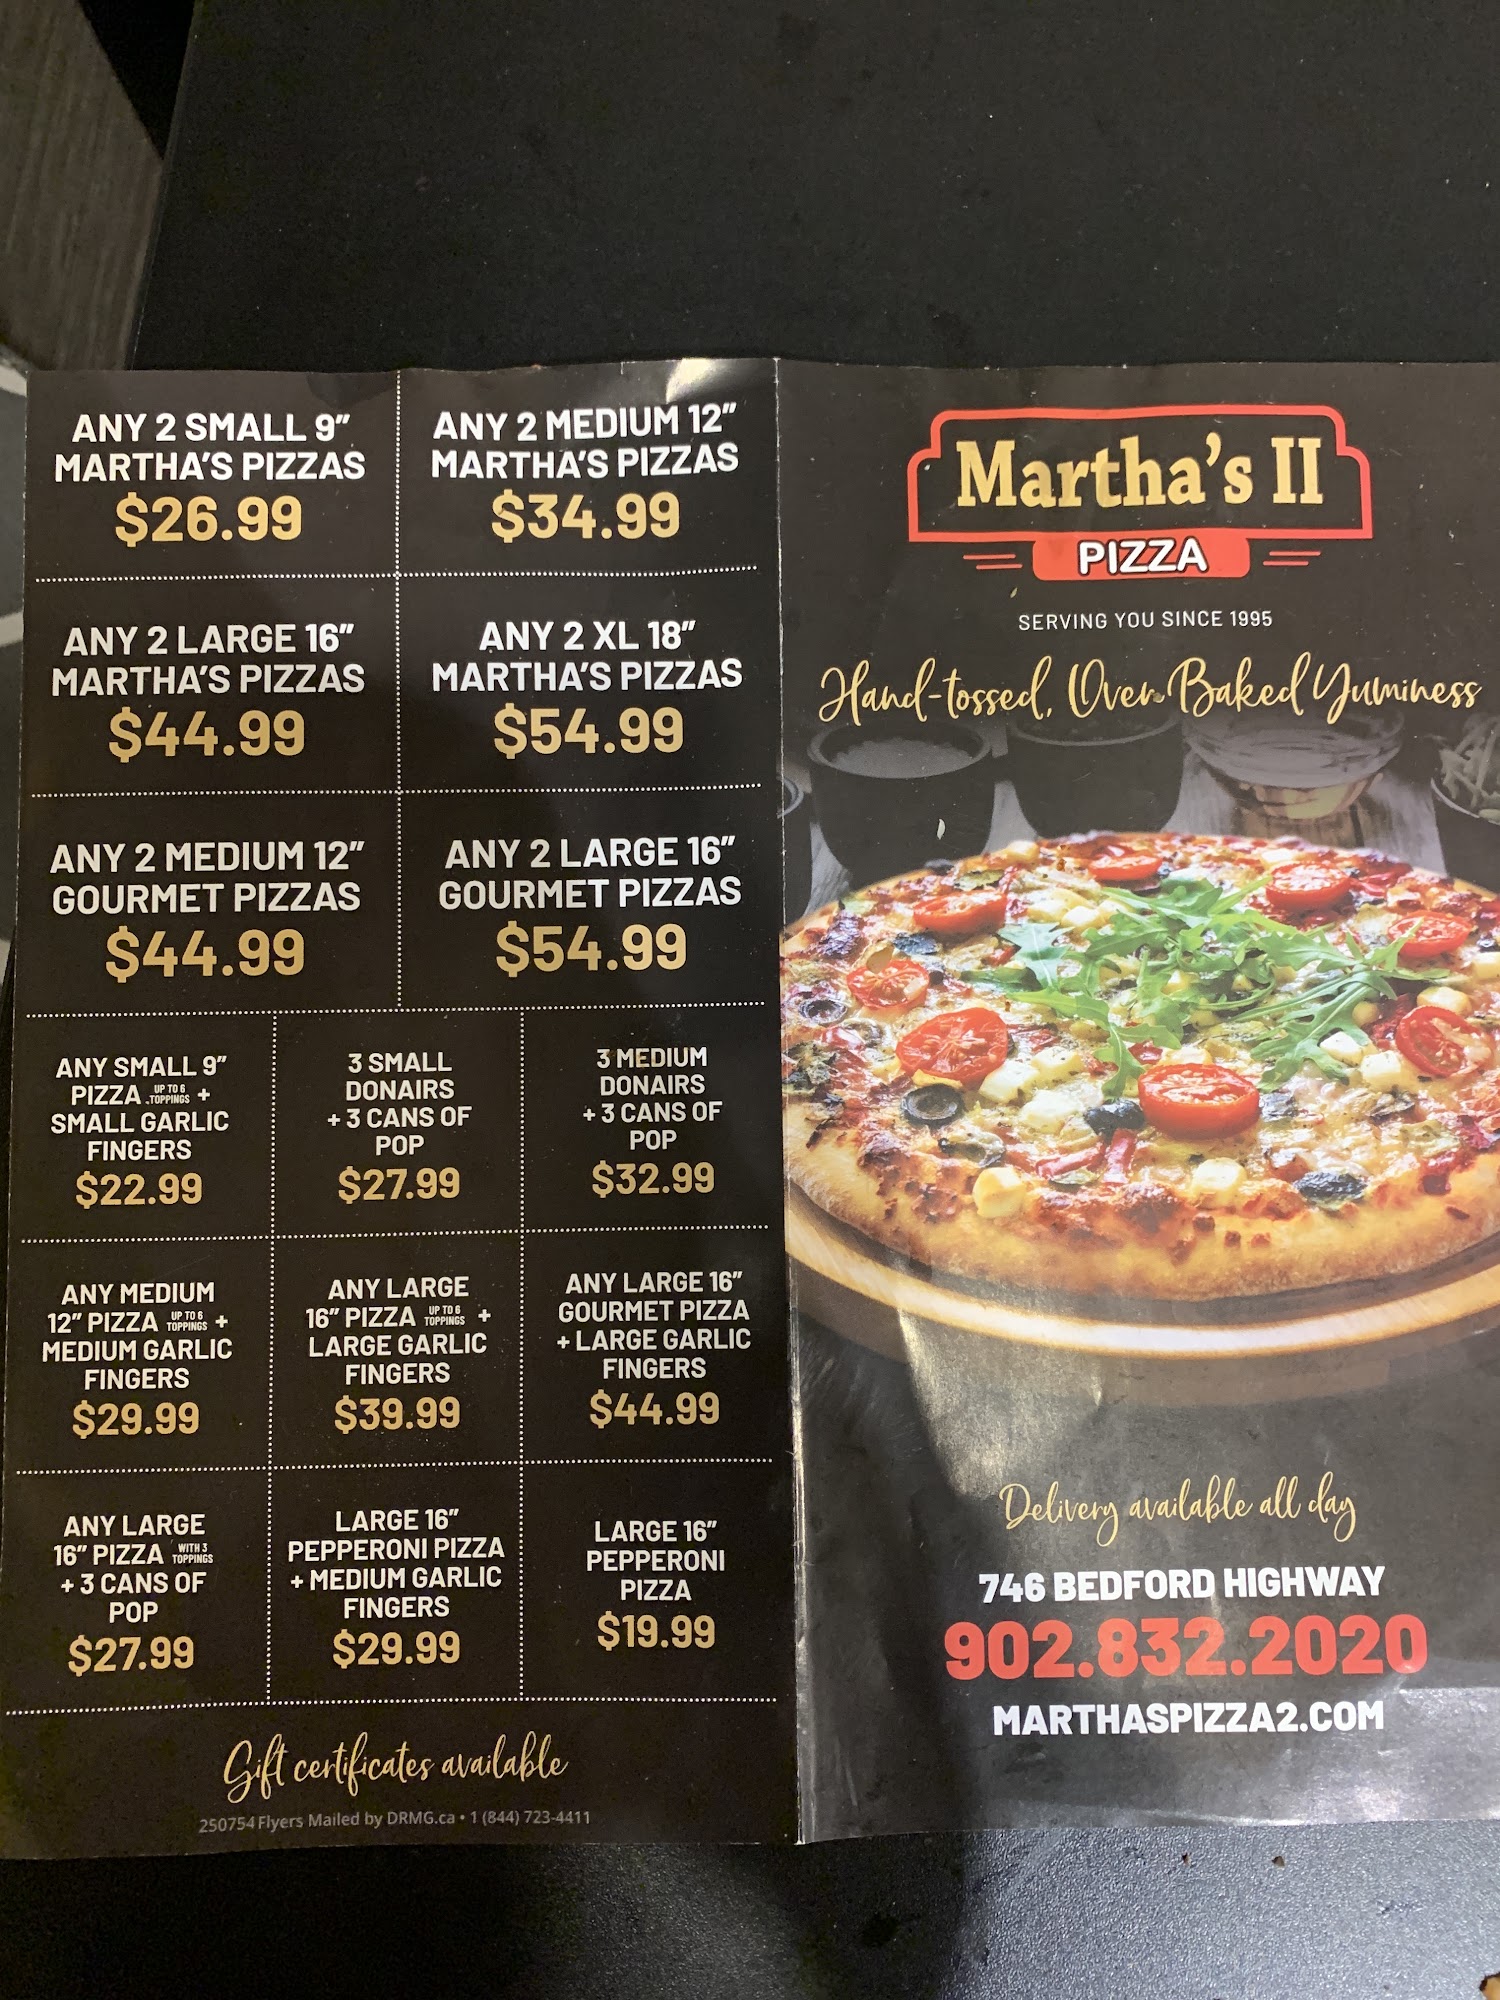 Martha's Pizza II